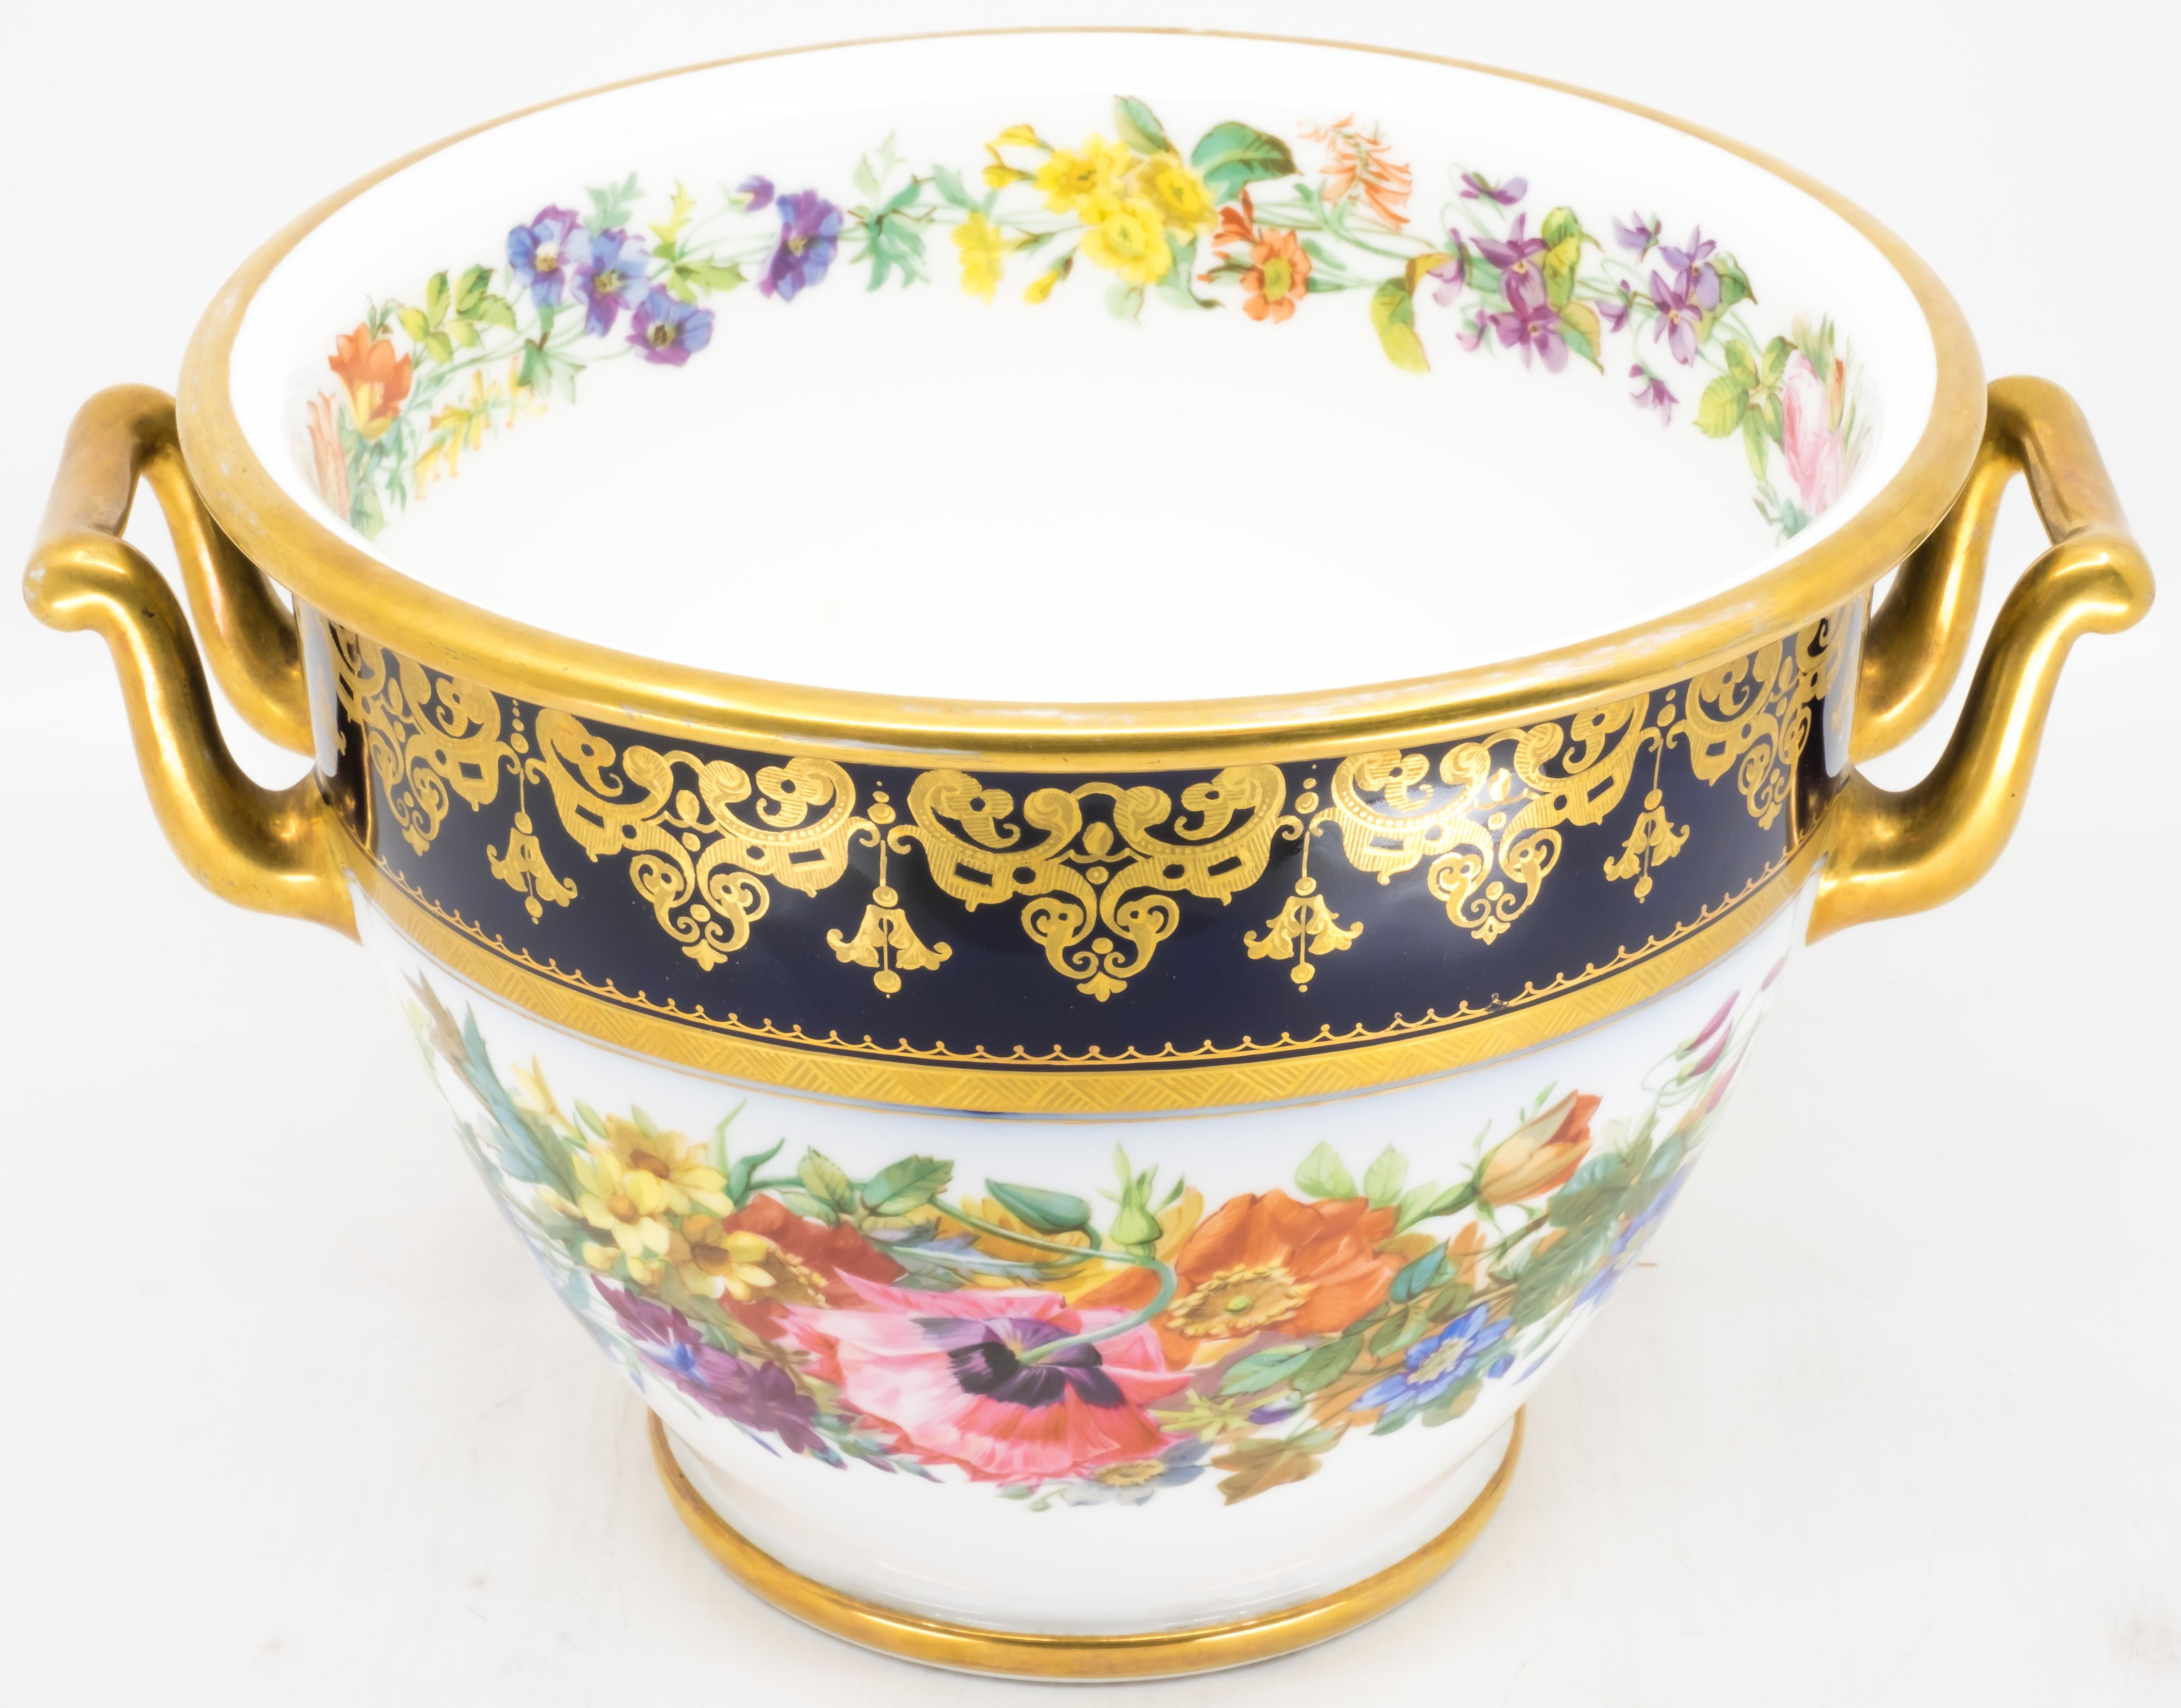 19th century sevres porcelain marks